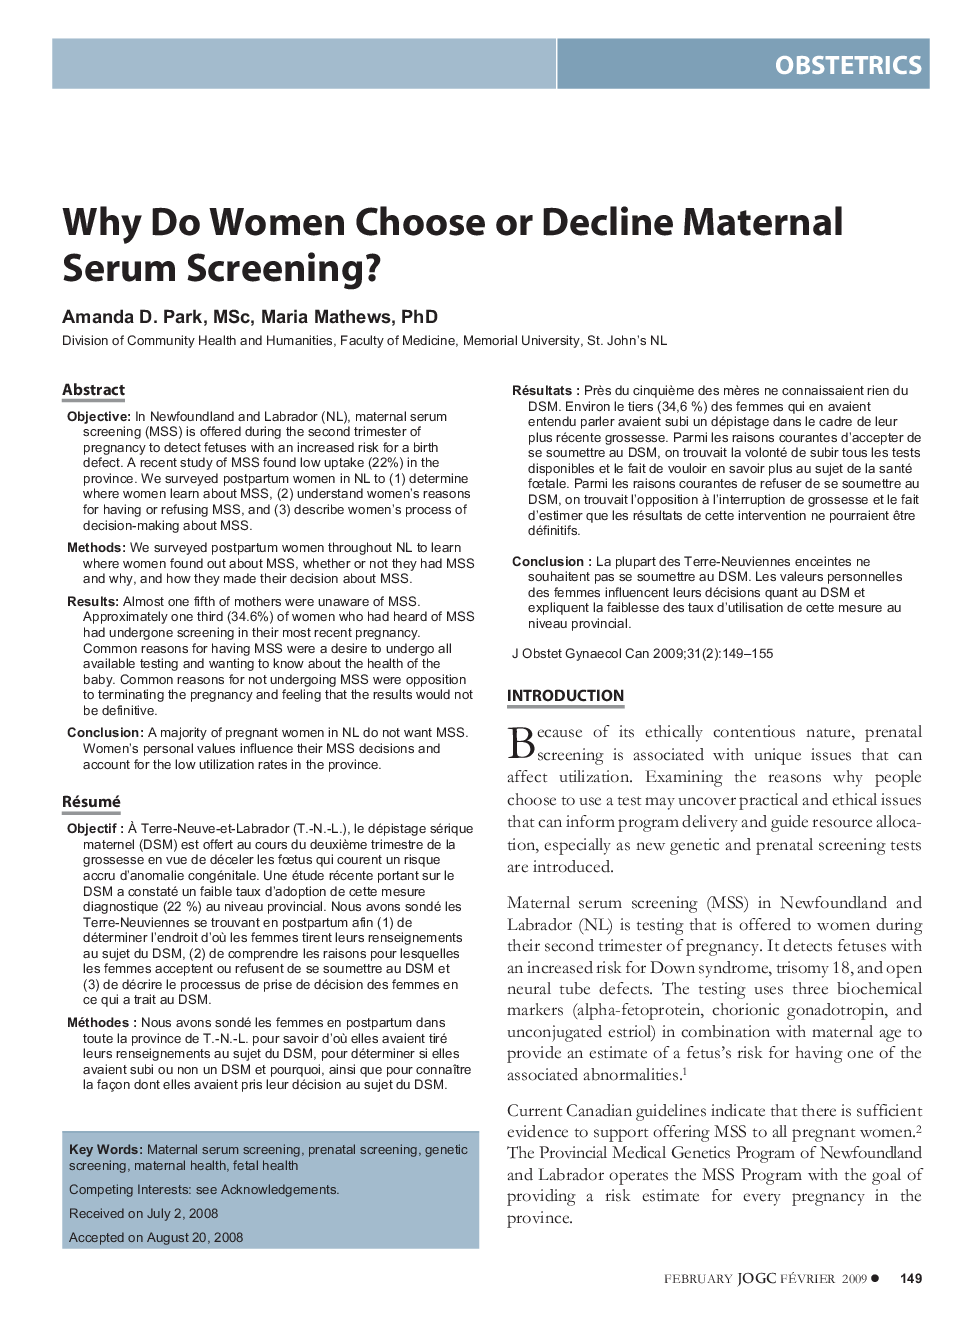 Why Do Women Choose or Decline Maternal Serum Screening?